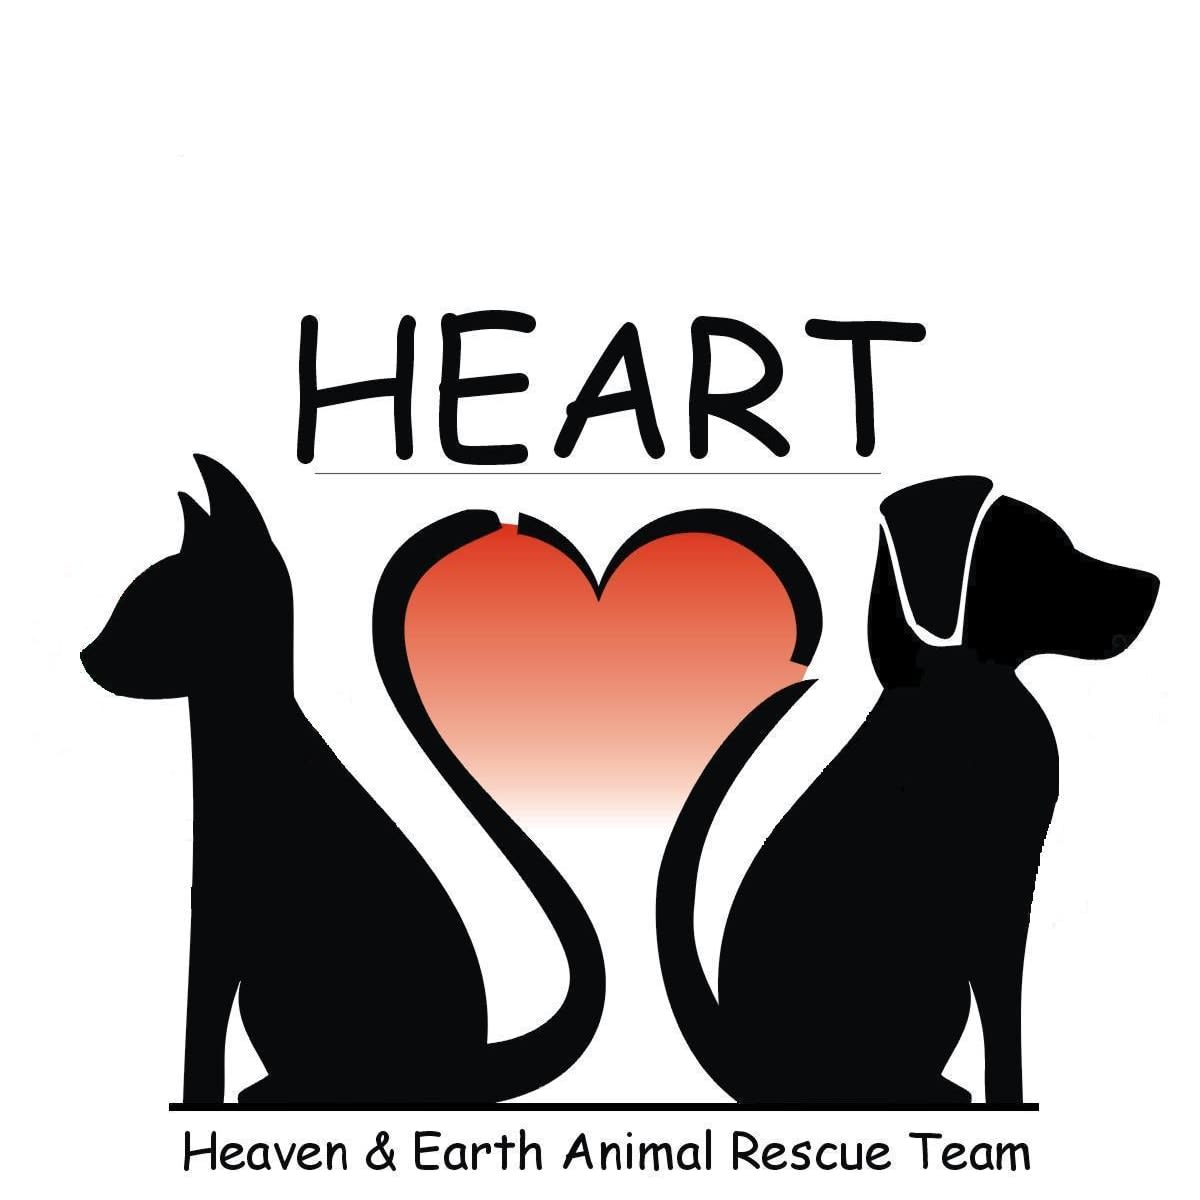 Heart Team. Теам Хеарт. Heart Pet. Pet heart